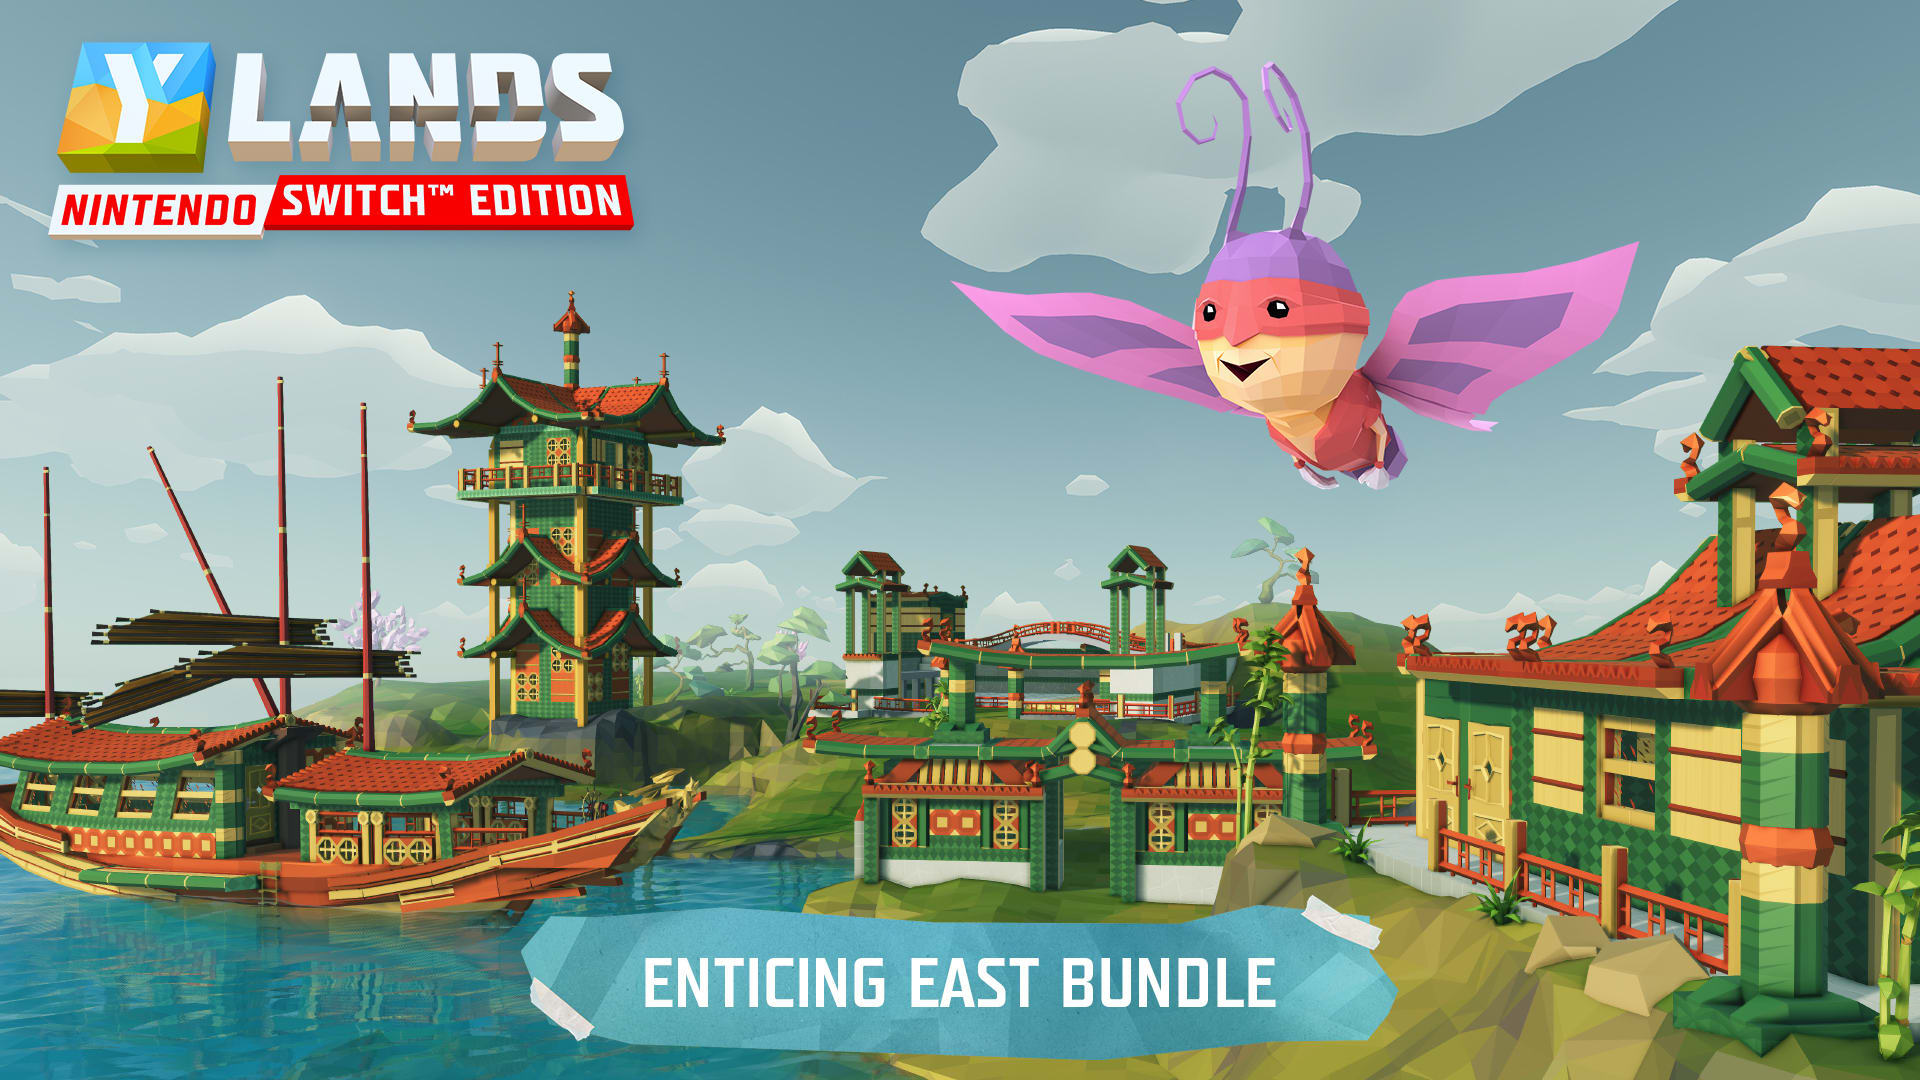 Ylands: Nintendo Switch™ Edition - Lote de Oriente Ostentoso